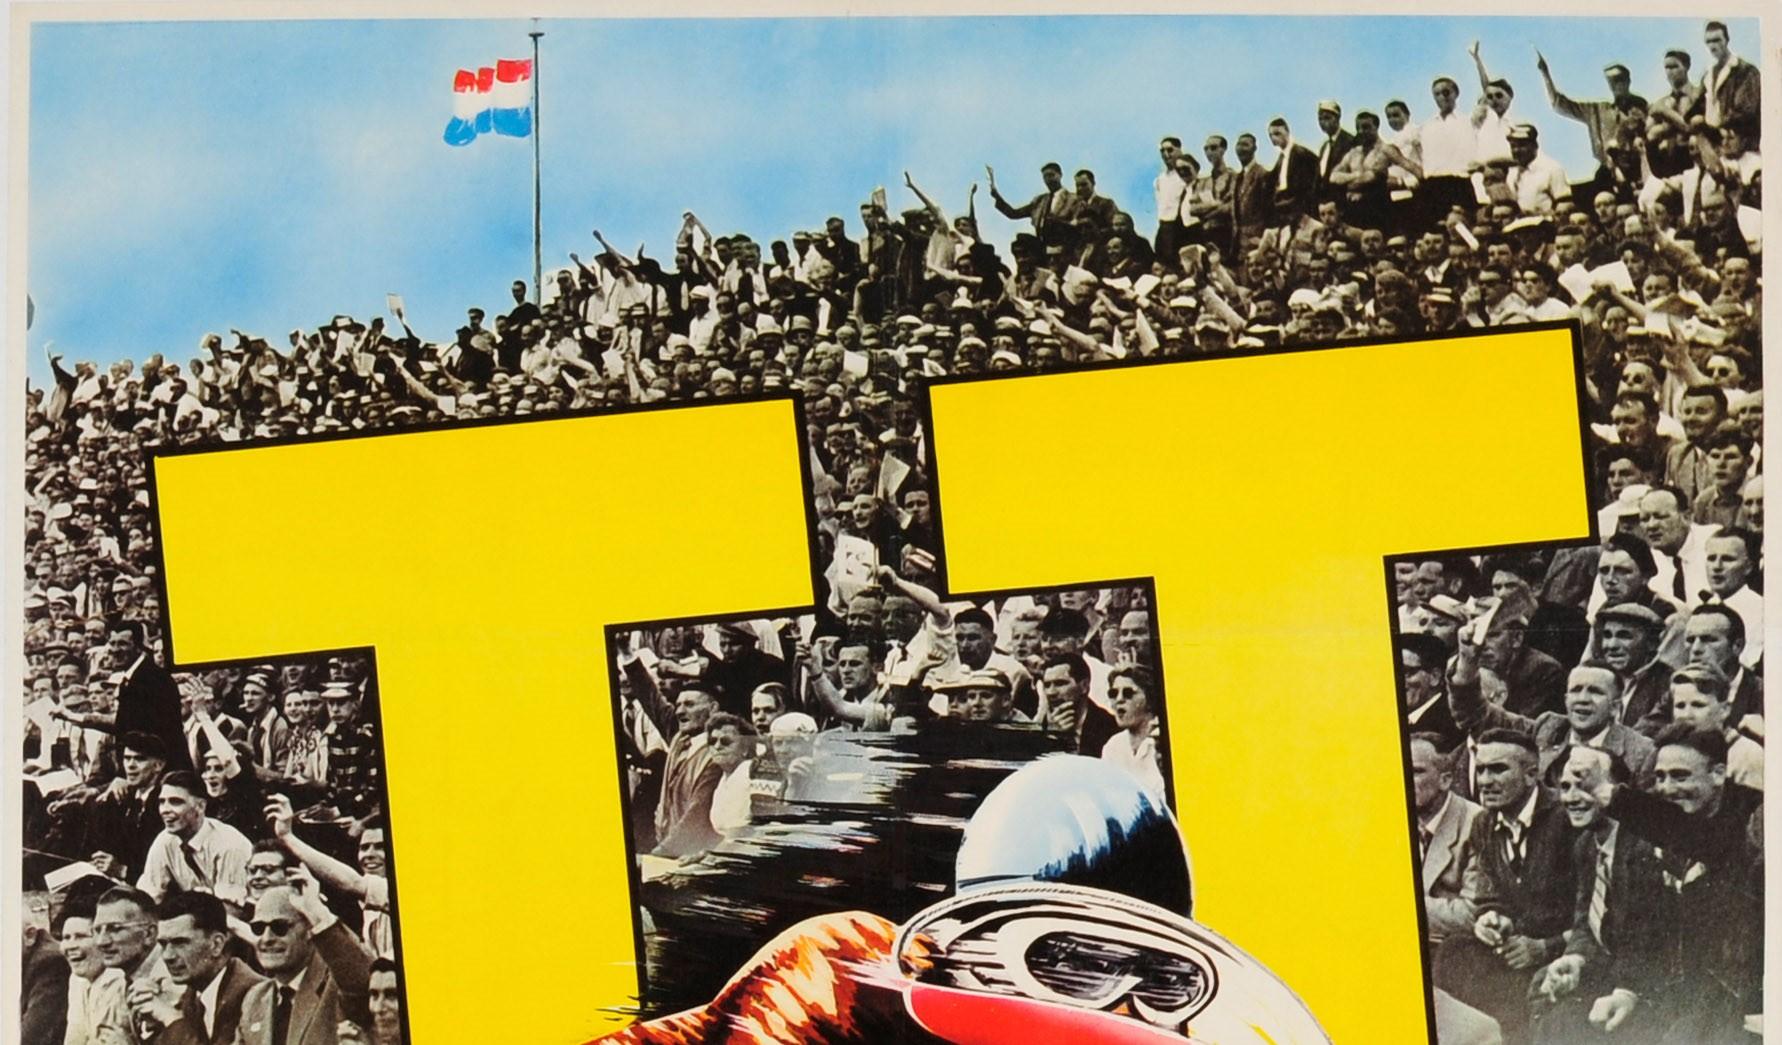 Original Vintage Assen Motorcycle Race Sport Poster 40 Years TT Races 1925-1965 - Print by Otter